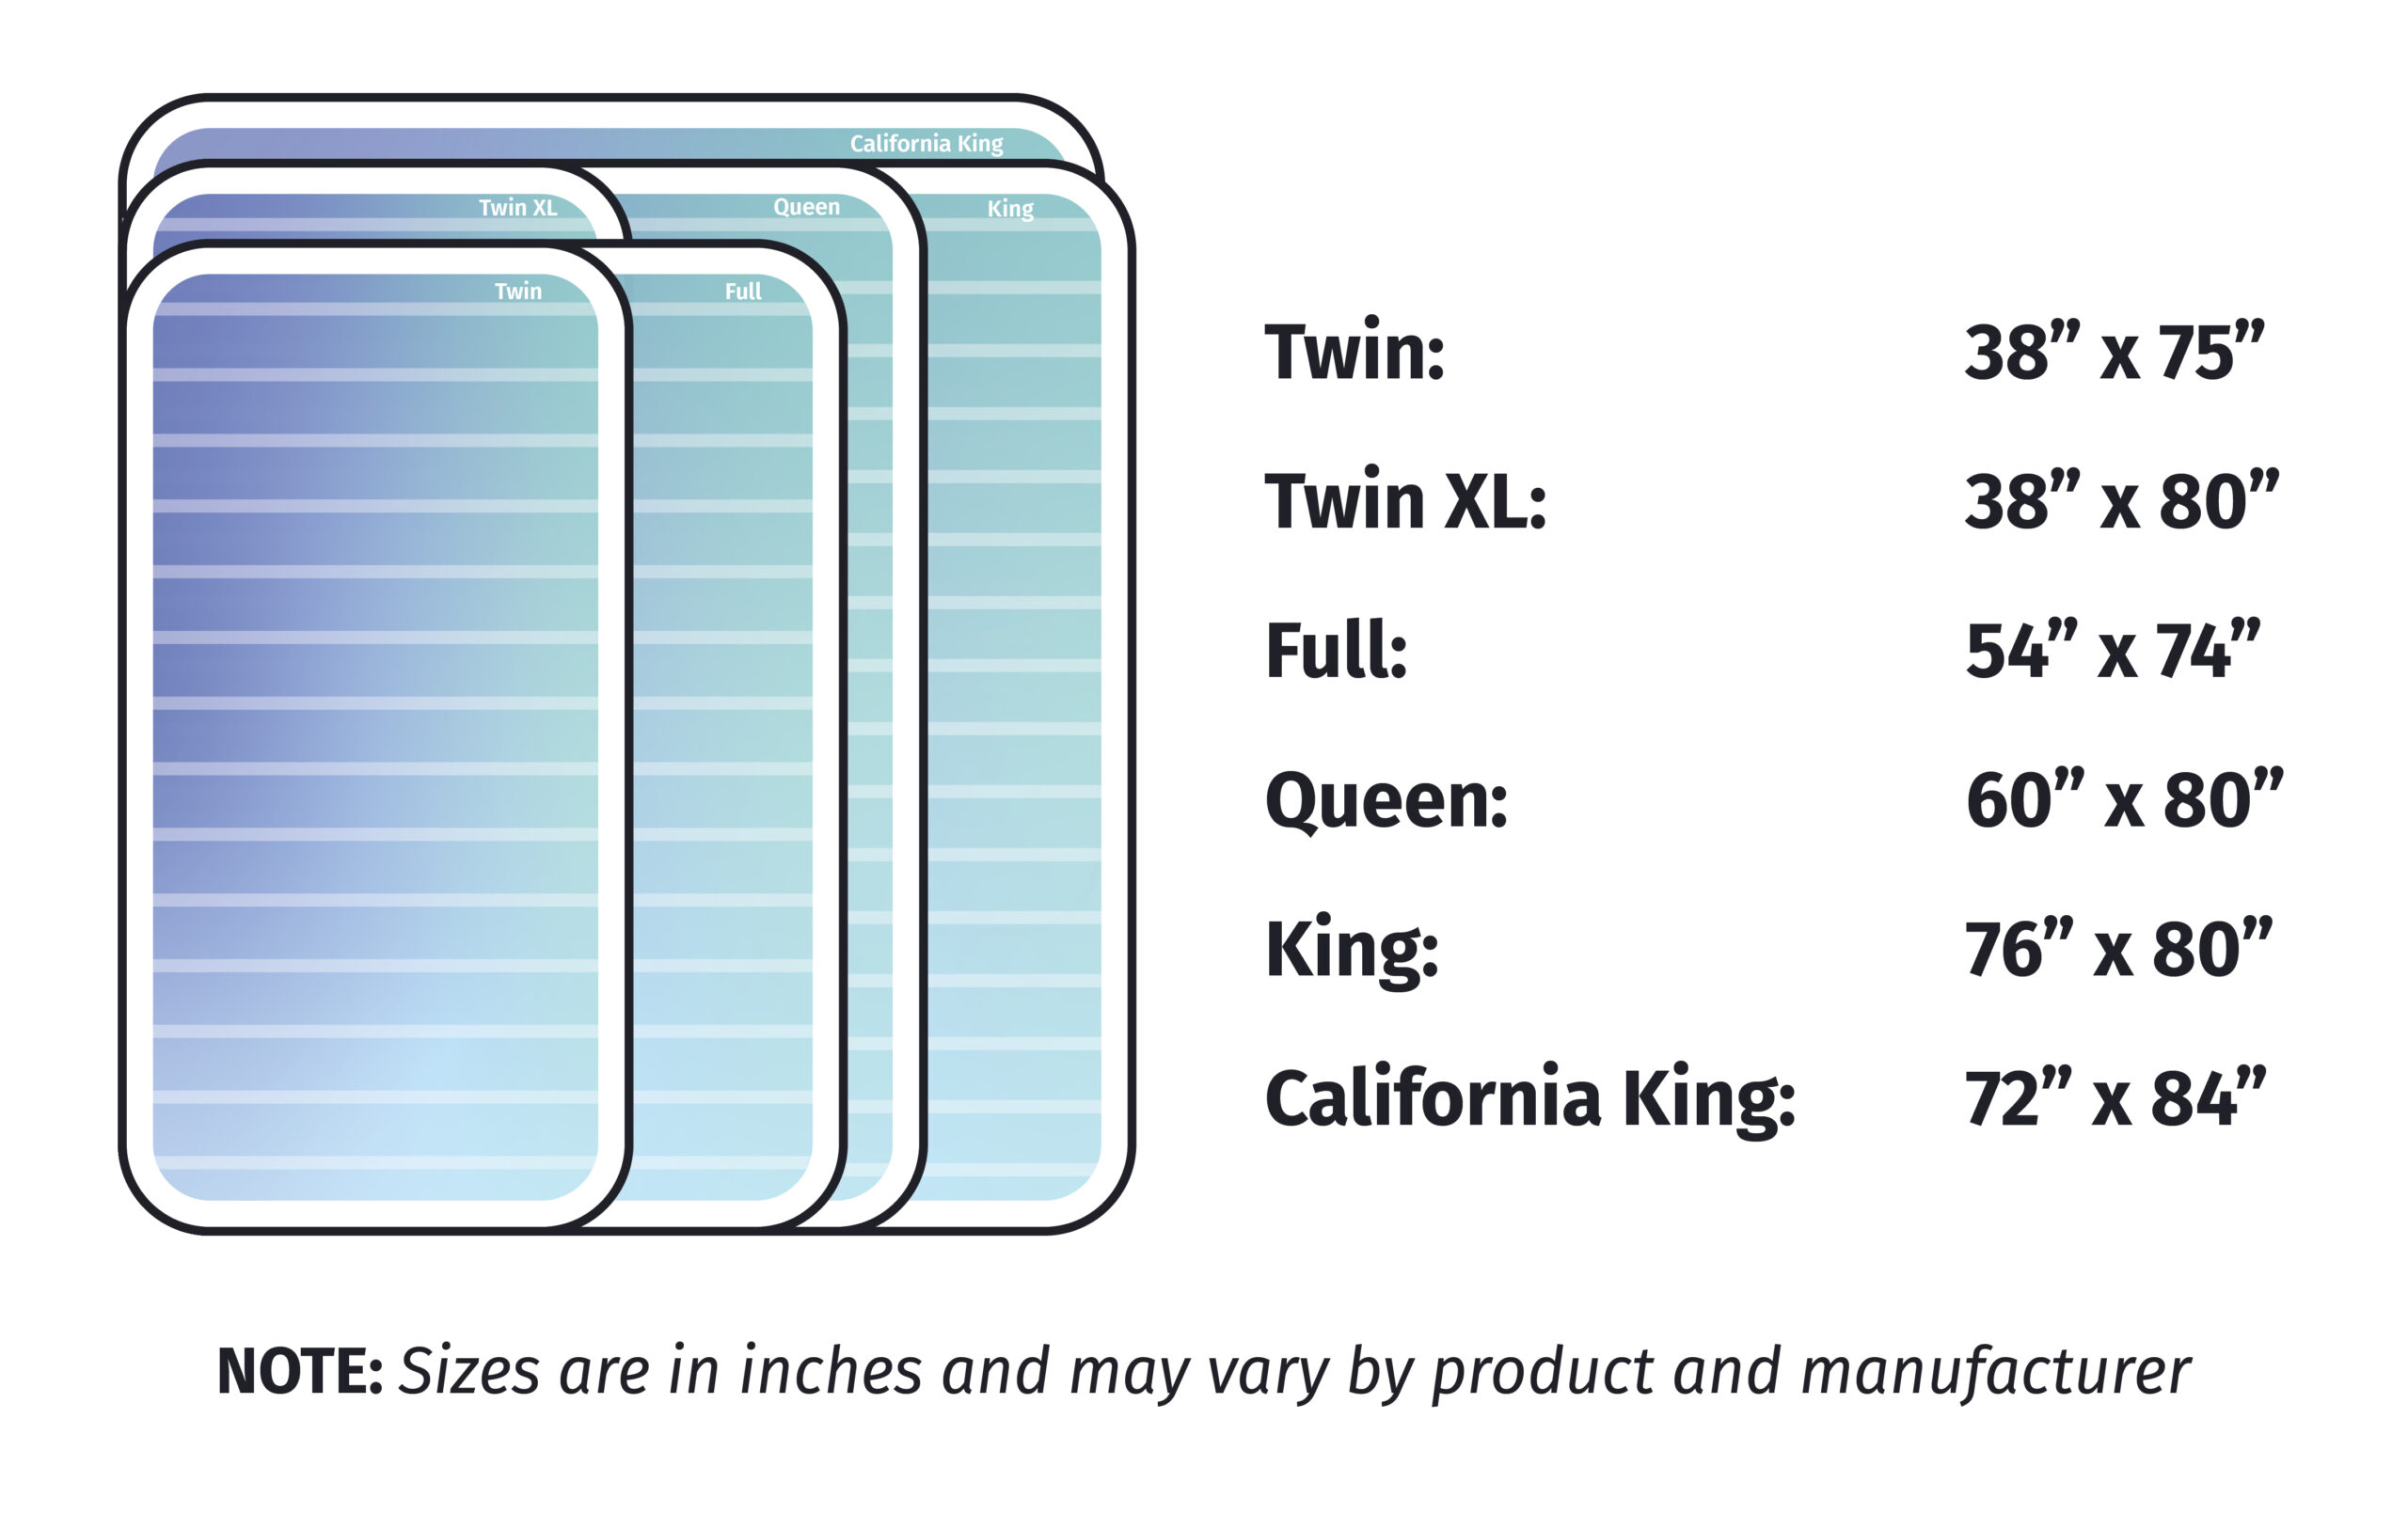 dimensions of queen size mattress vs full